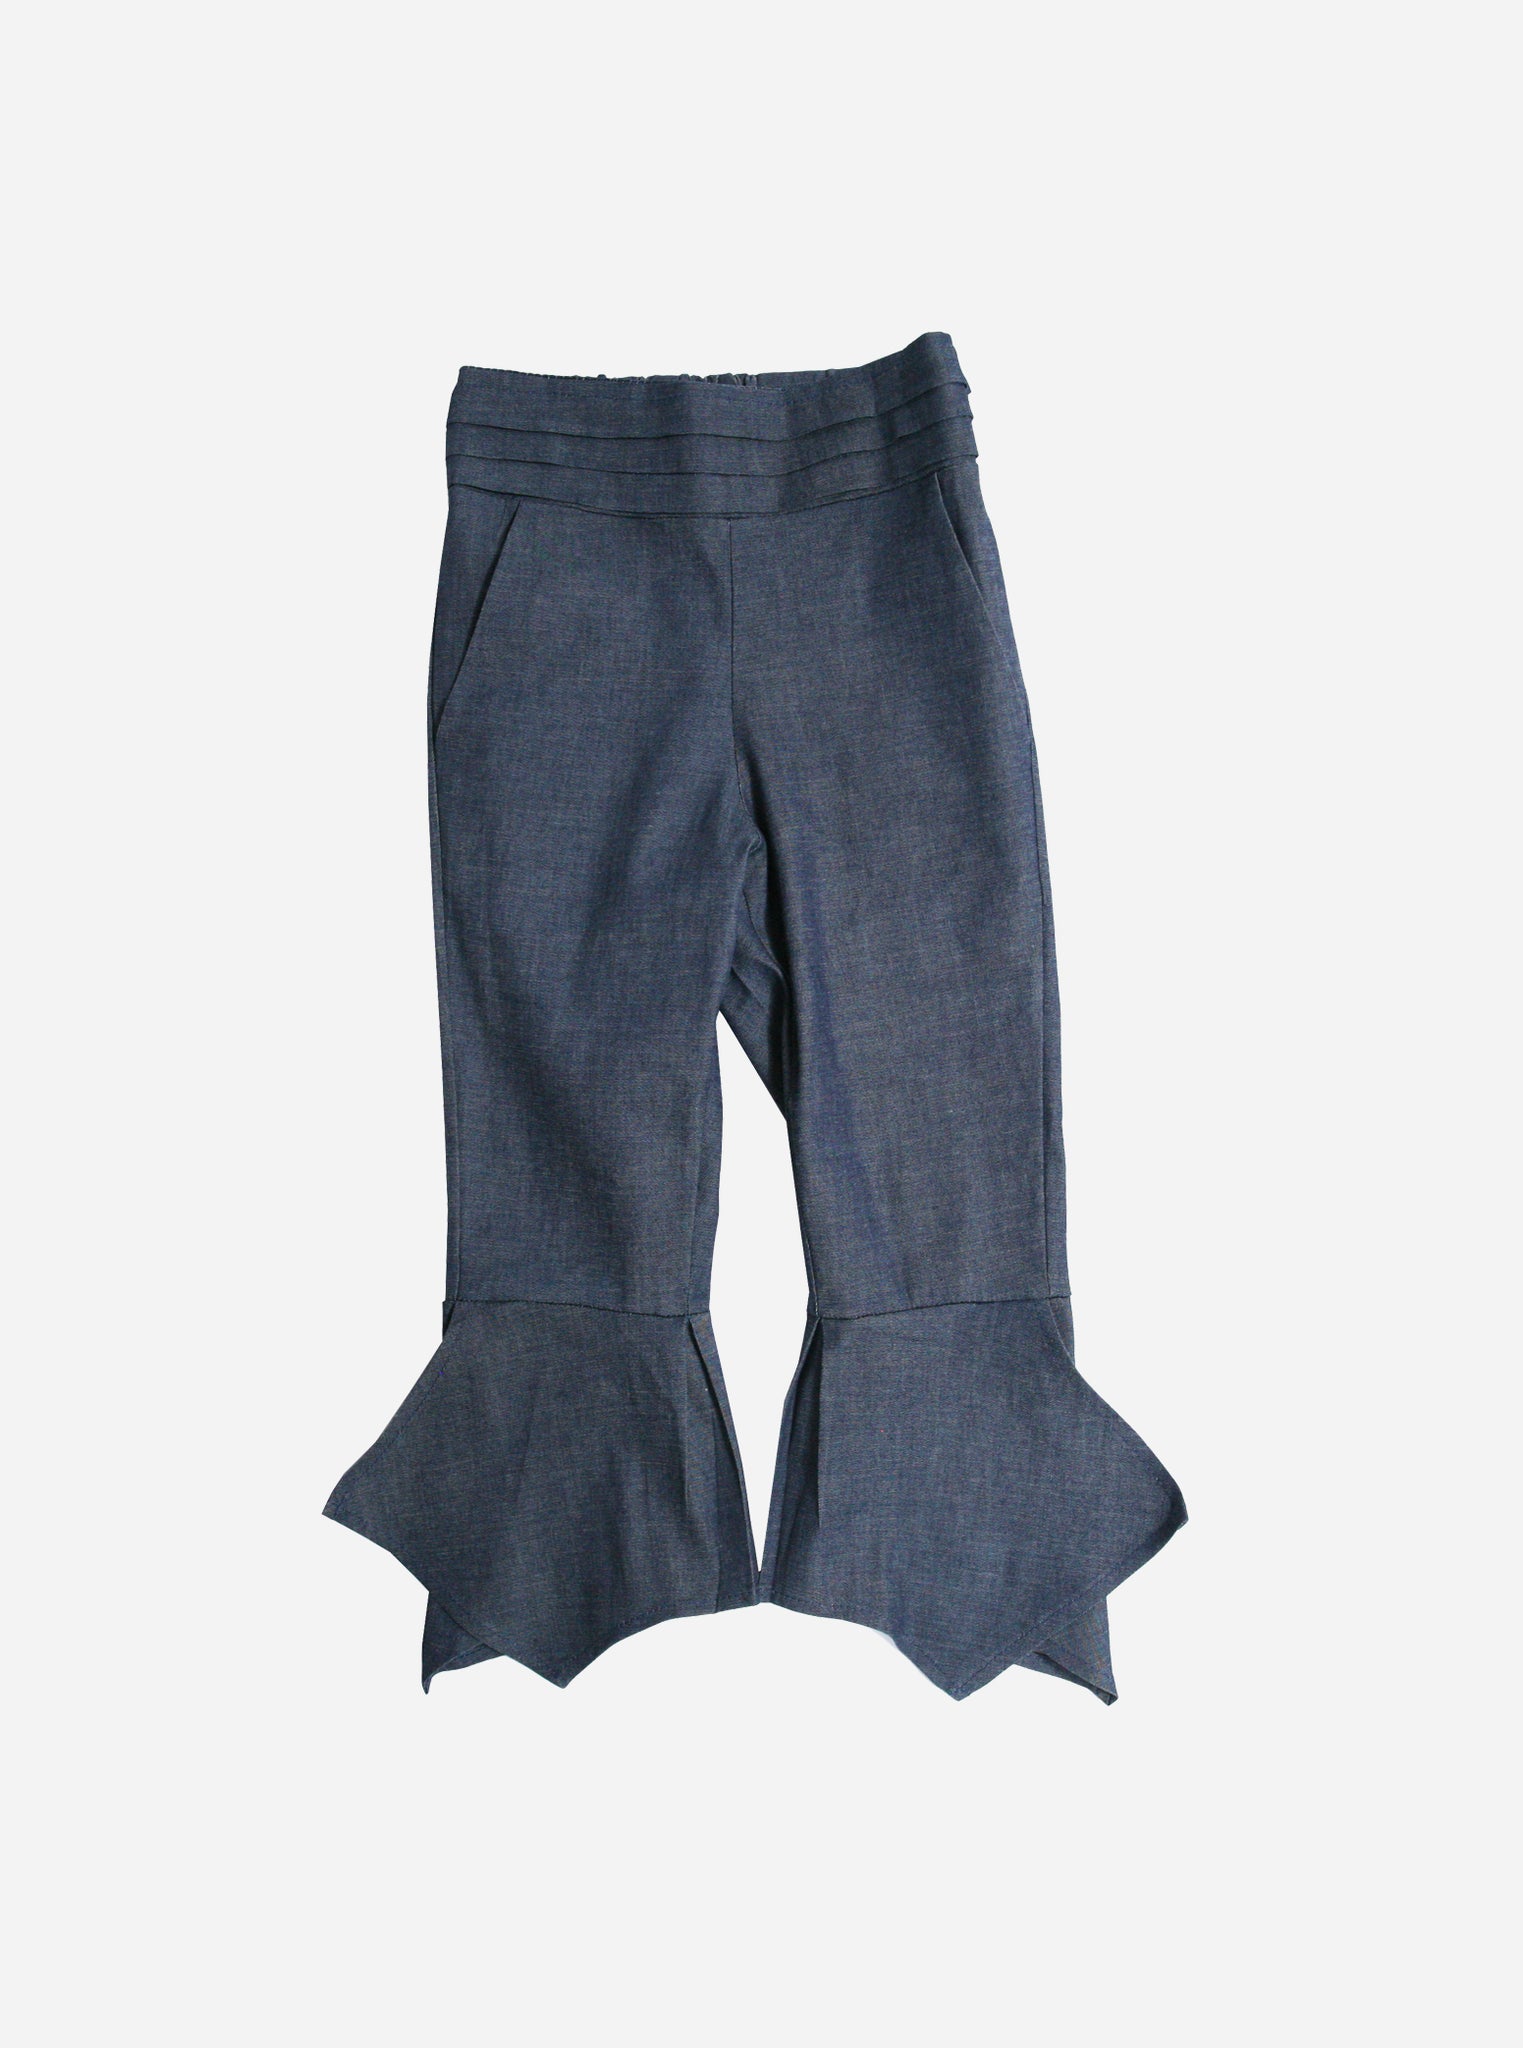 Jeans leggero ADA-OUTLET Pantaloni e Shorts-I Leoncini Shop